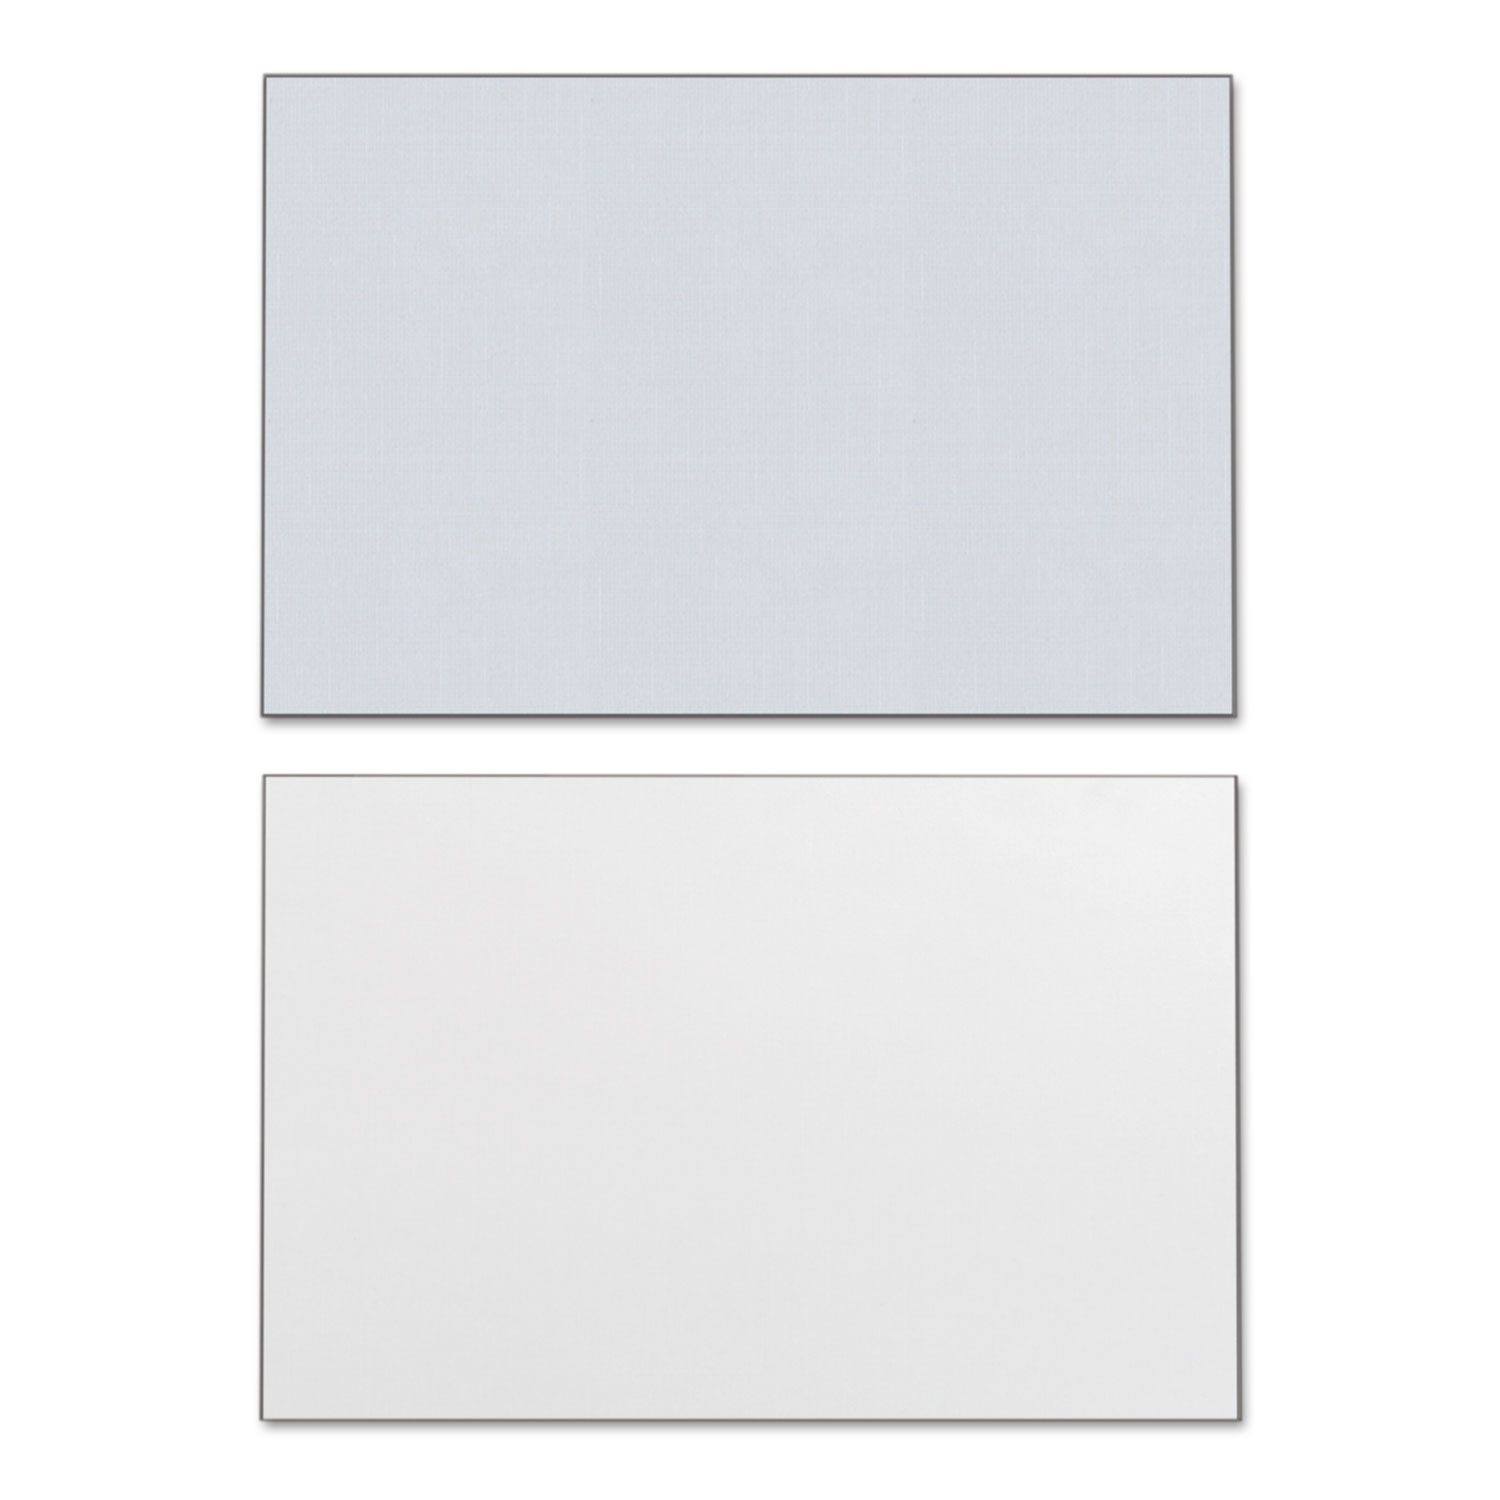 Reversible Laminate Table Top, Rectangular, 35 3/8w x 23 5/8d, White/Gray